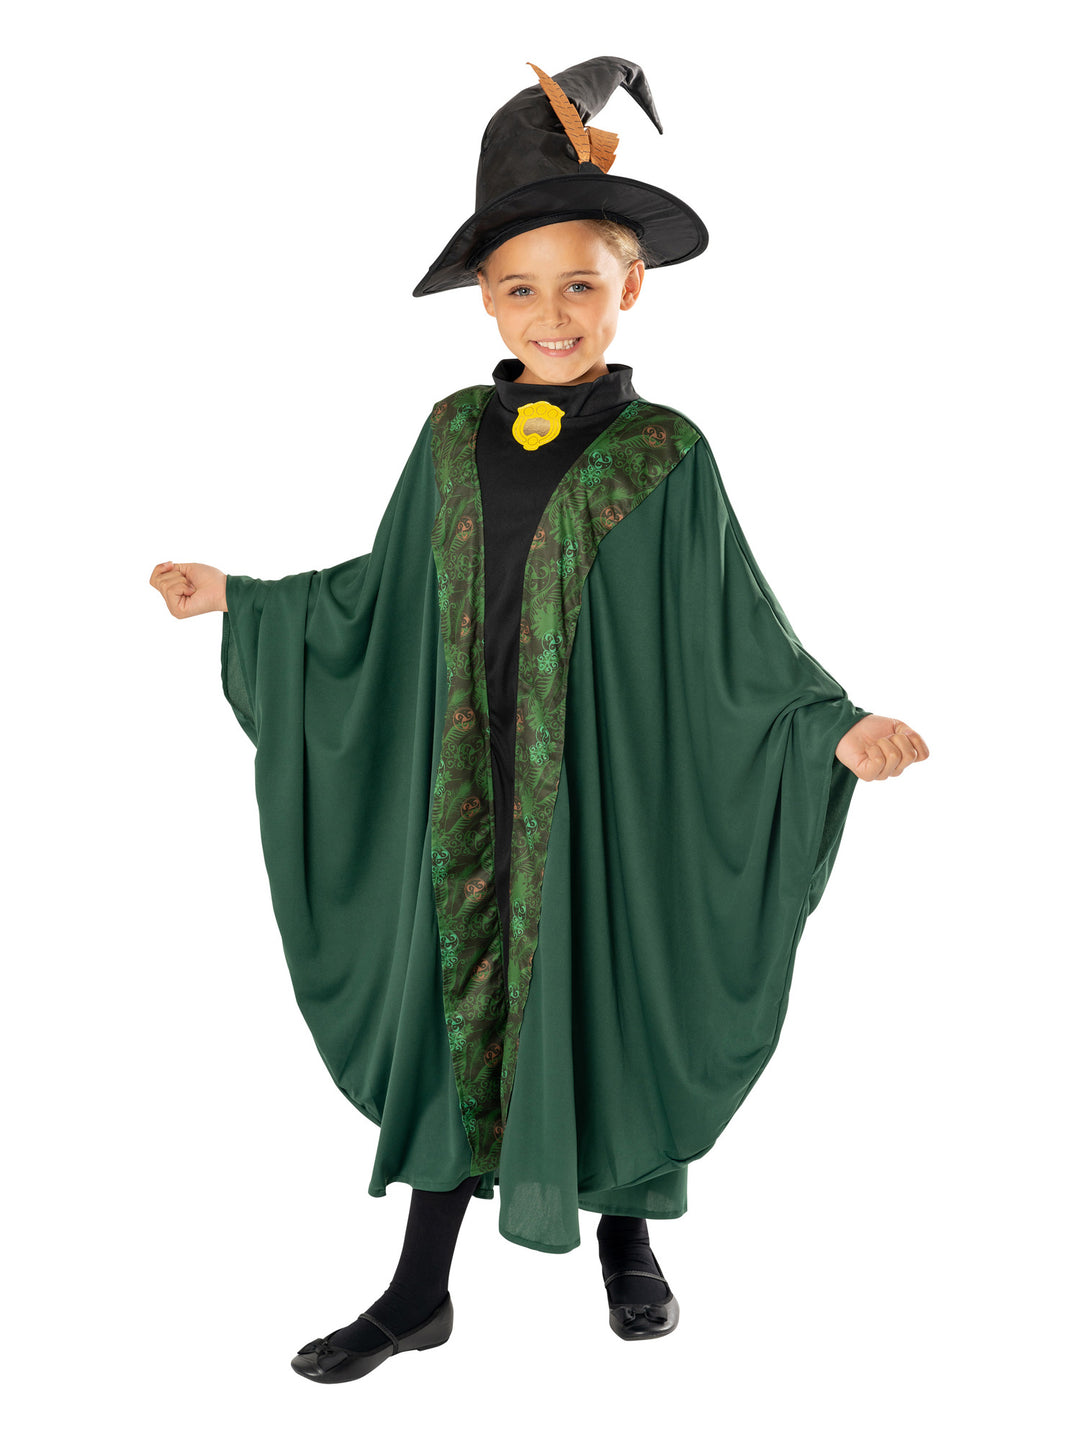 Professor Mcgonagall Robe Kids Harry Potter Costume_1 rub-3009131314